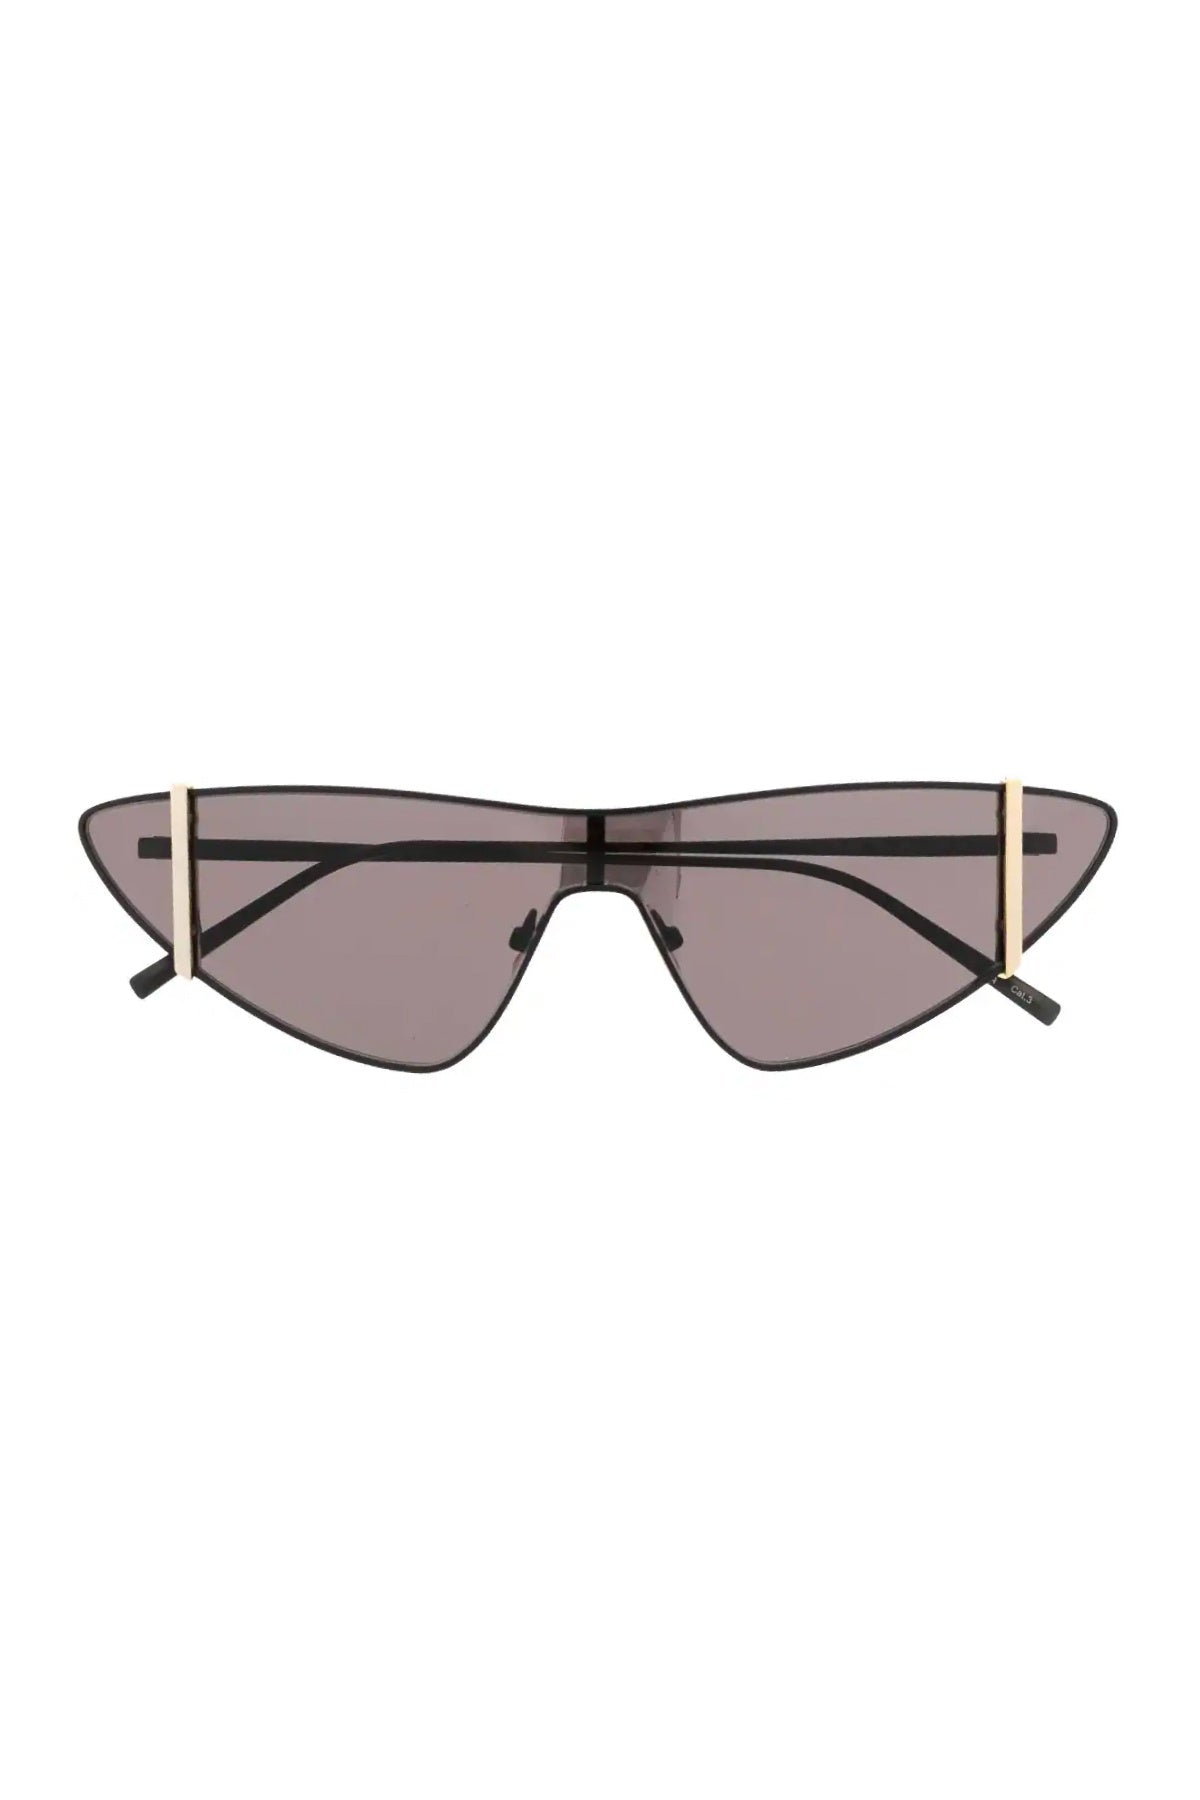 Saint Laurent Triangle Frame Sunglasses - Black